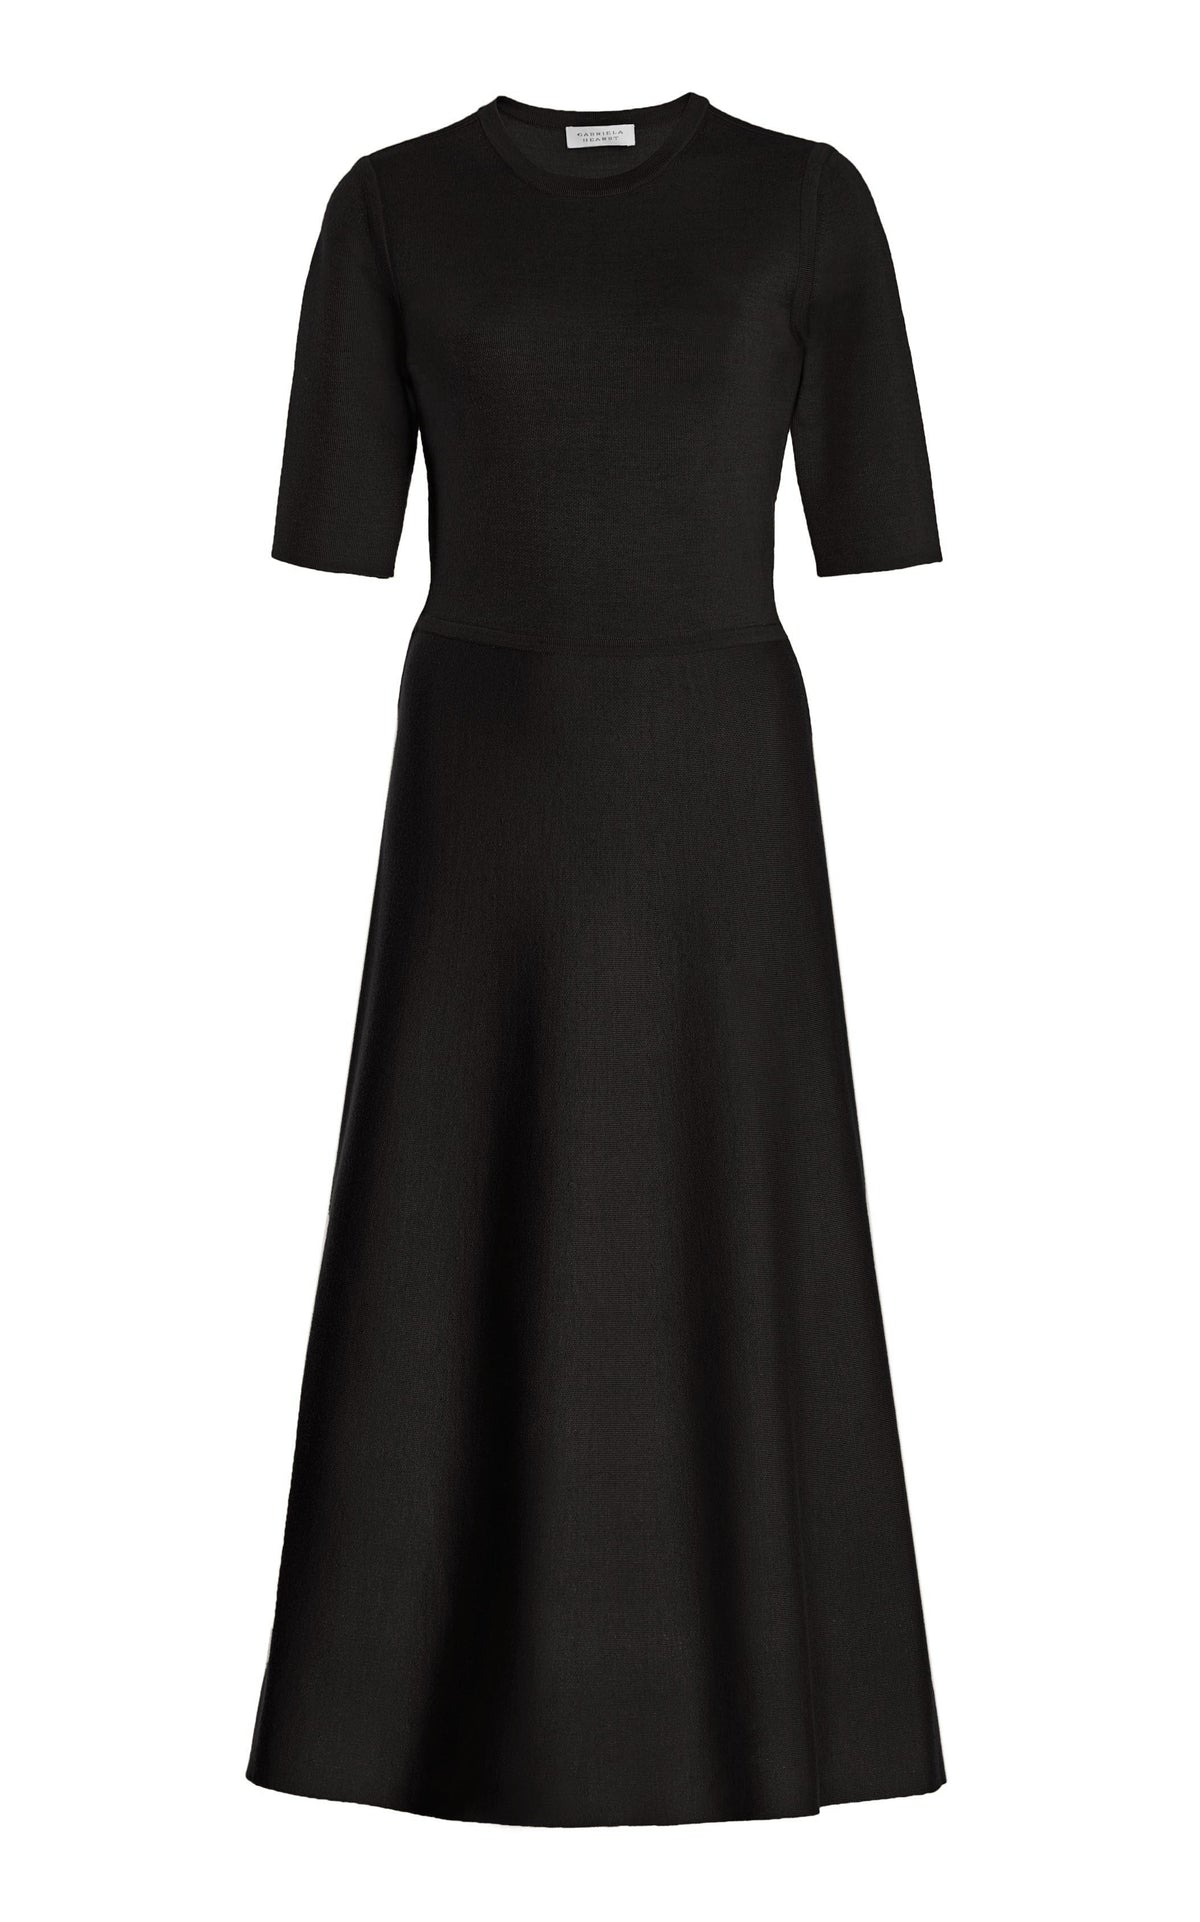 Seymore Knit Dress in Black Merino Wool Cashmere